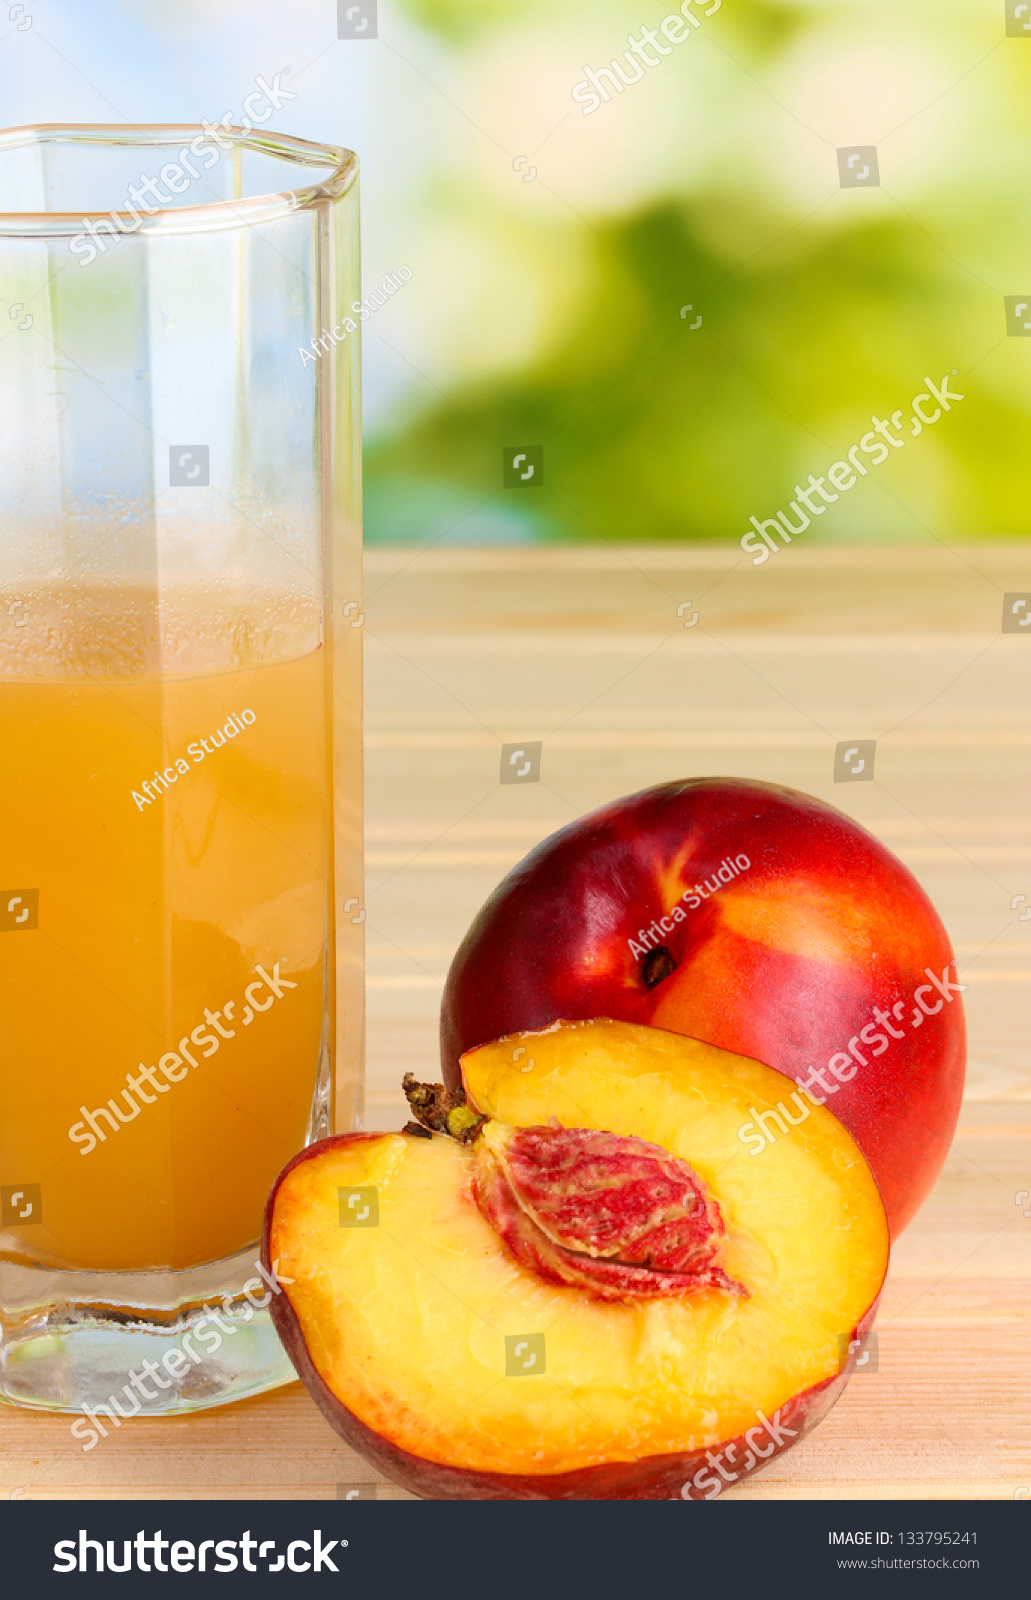 Ripened peach crack juice